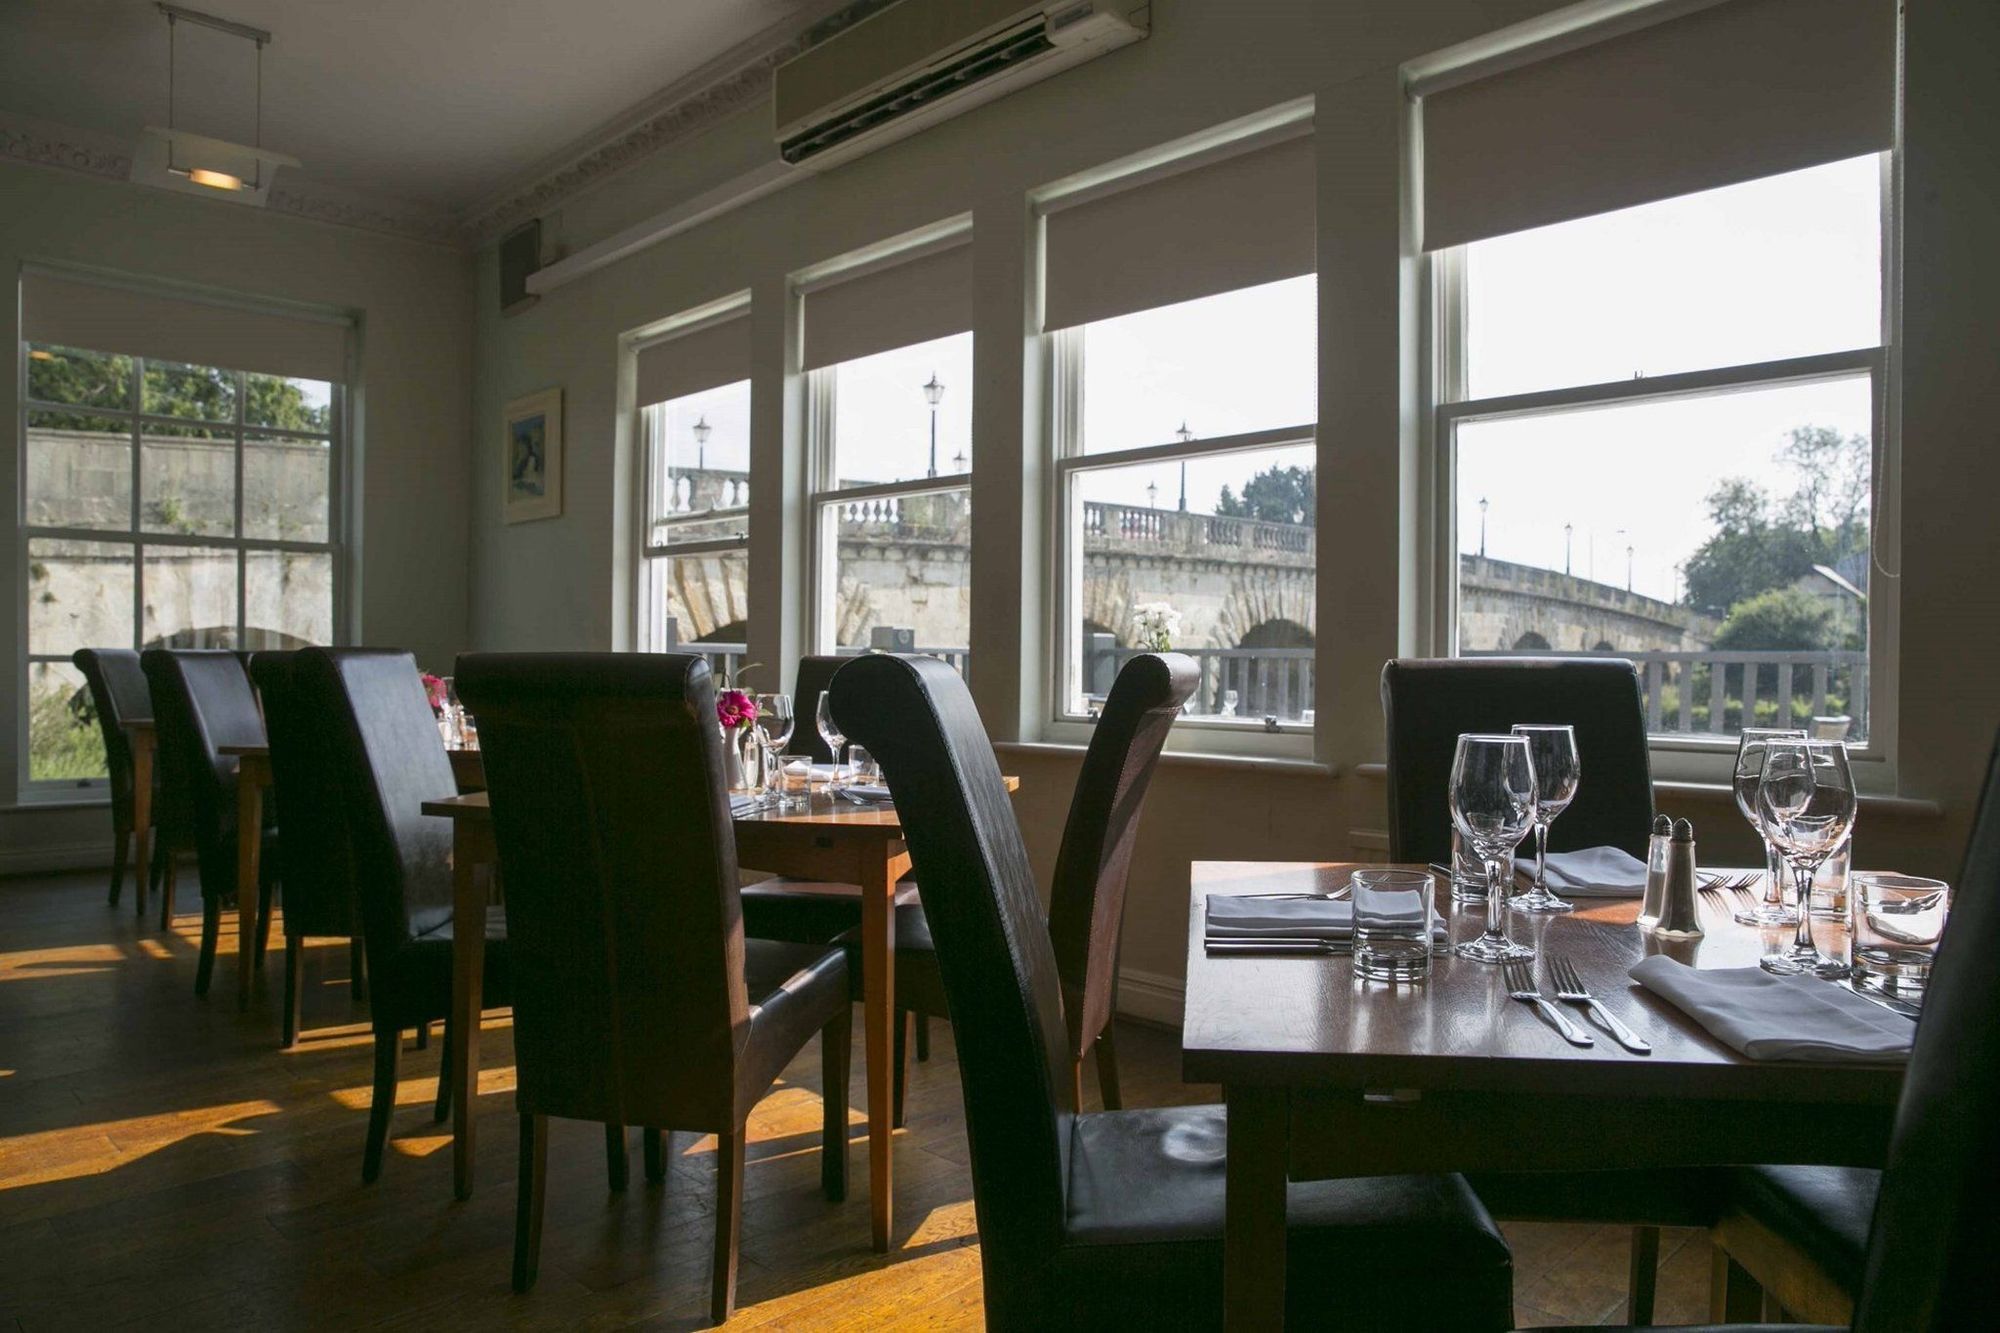 The Thames Riviera Hotel Maidenhead Restaurant photo